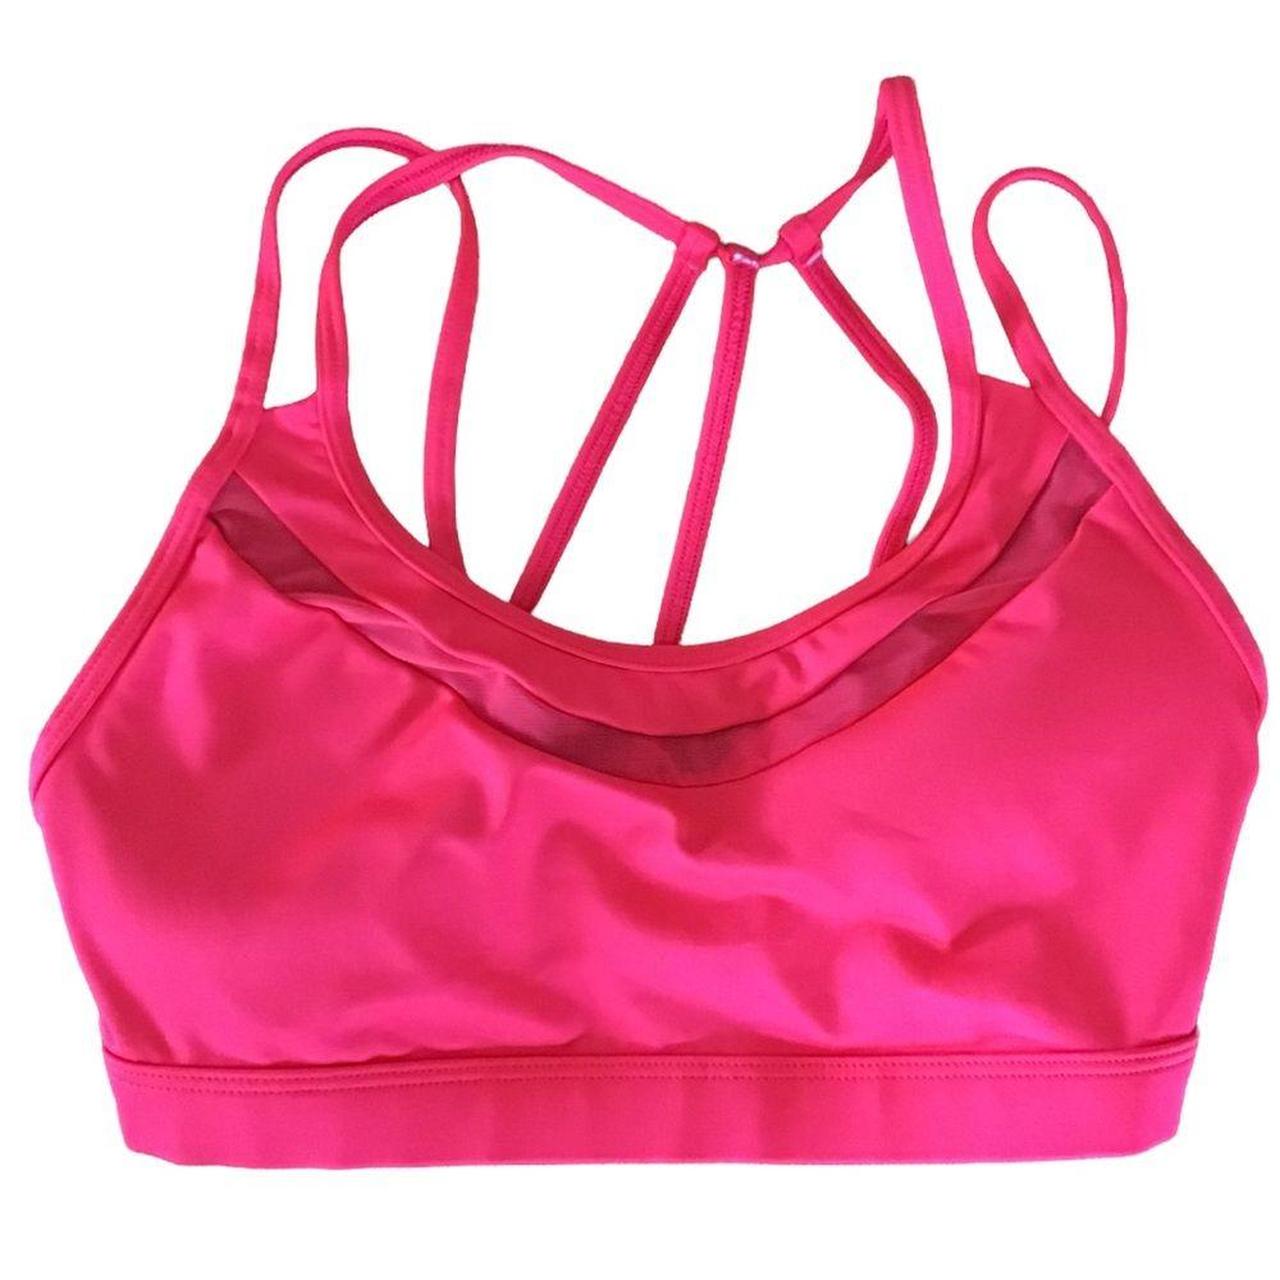 Pink ultimate push up sports bra tie dye - Depop